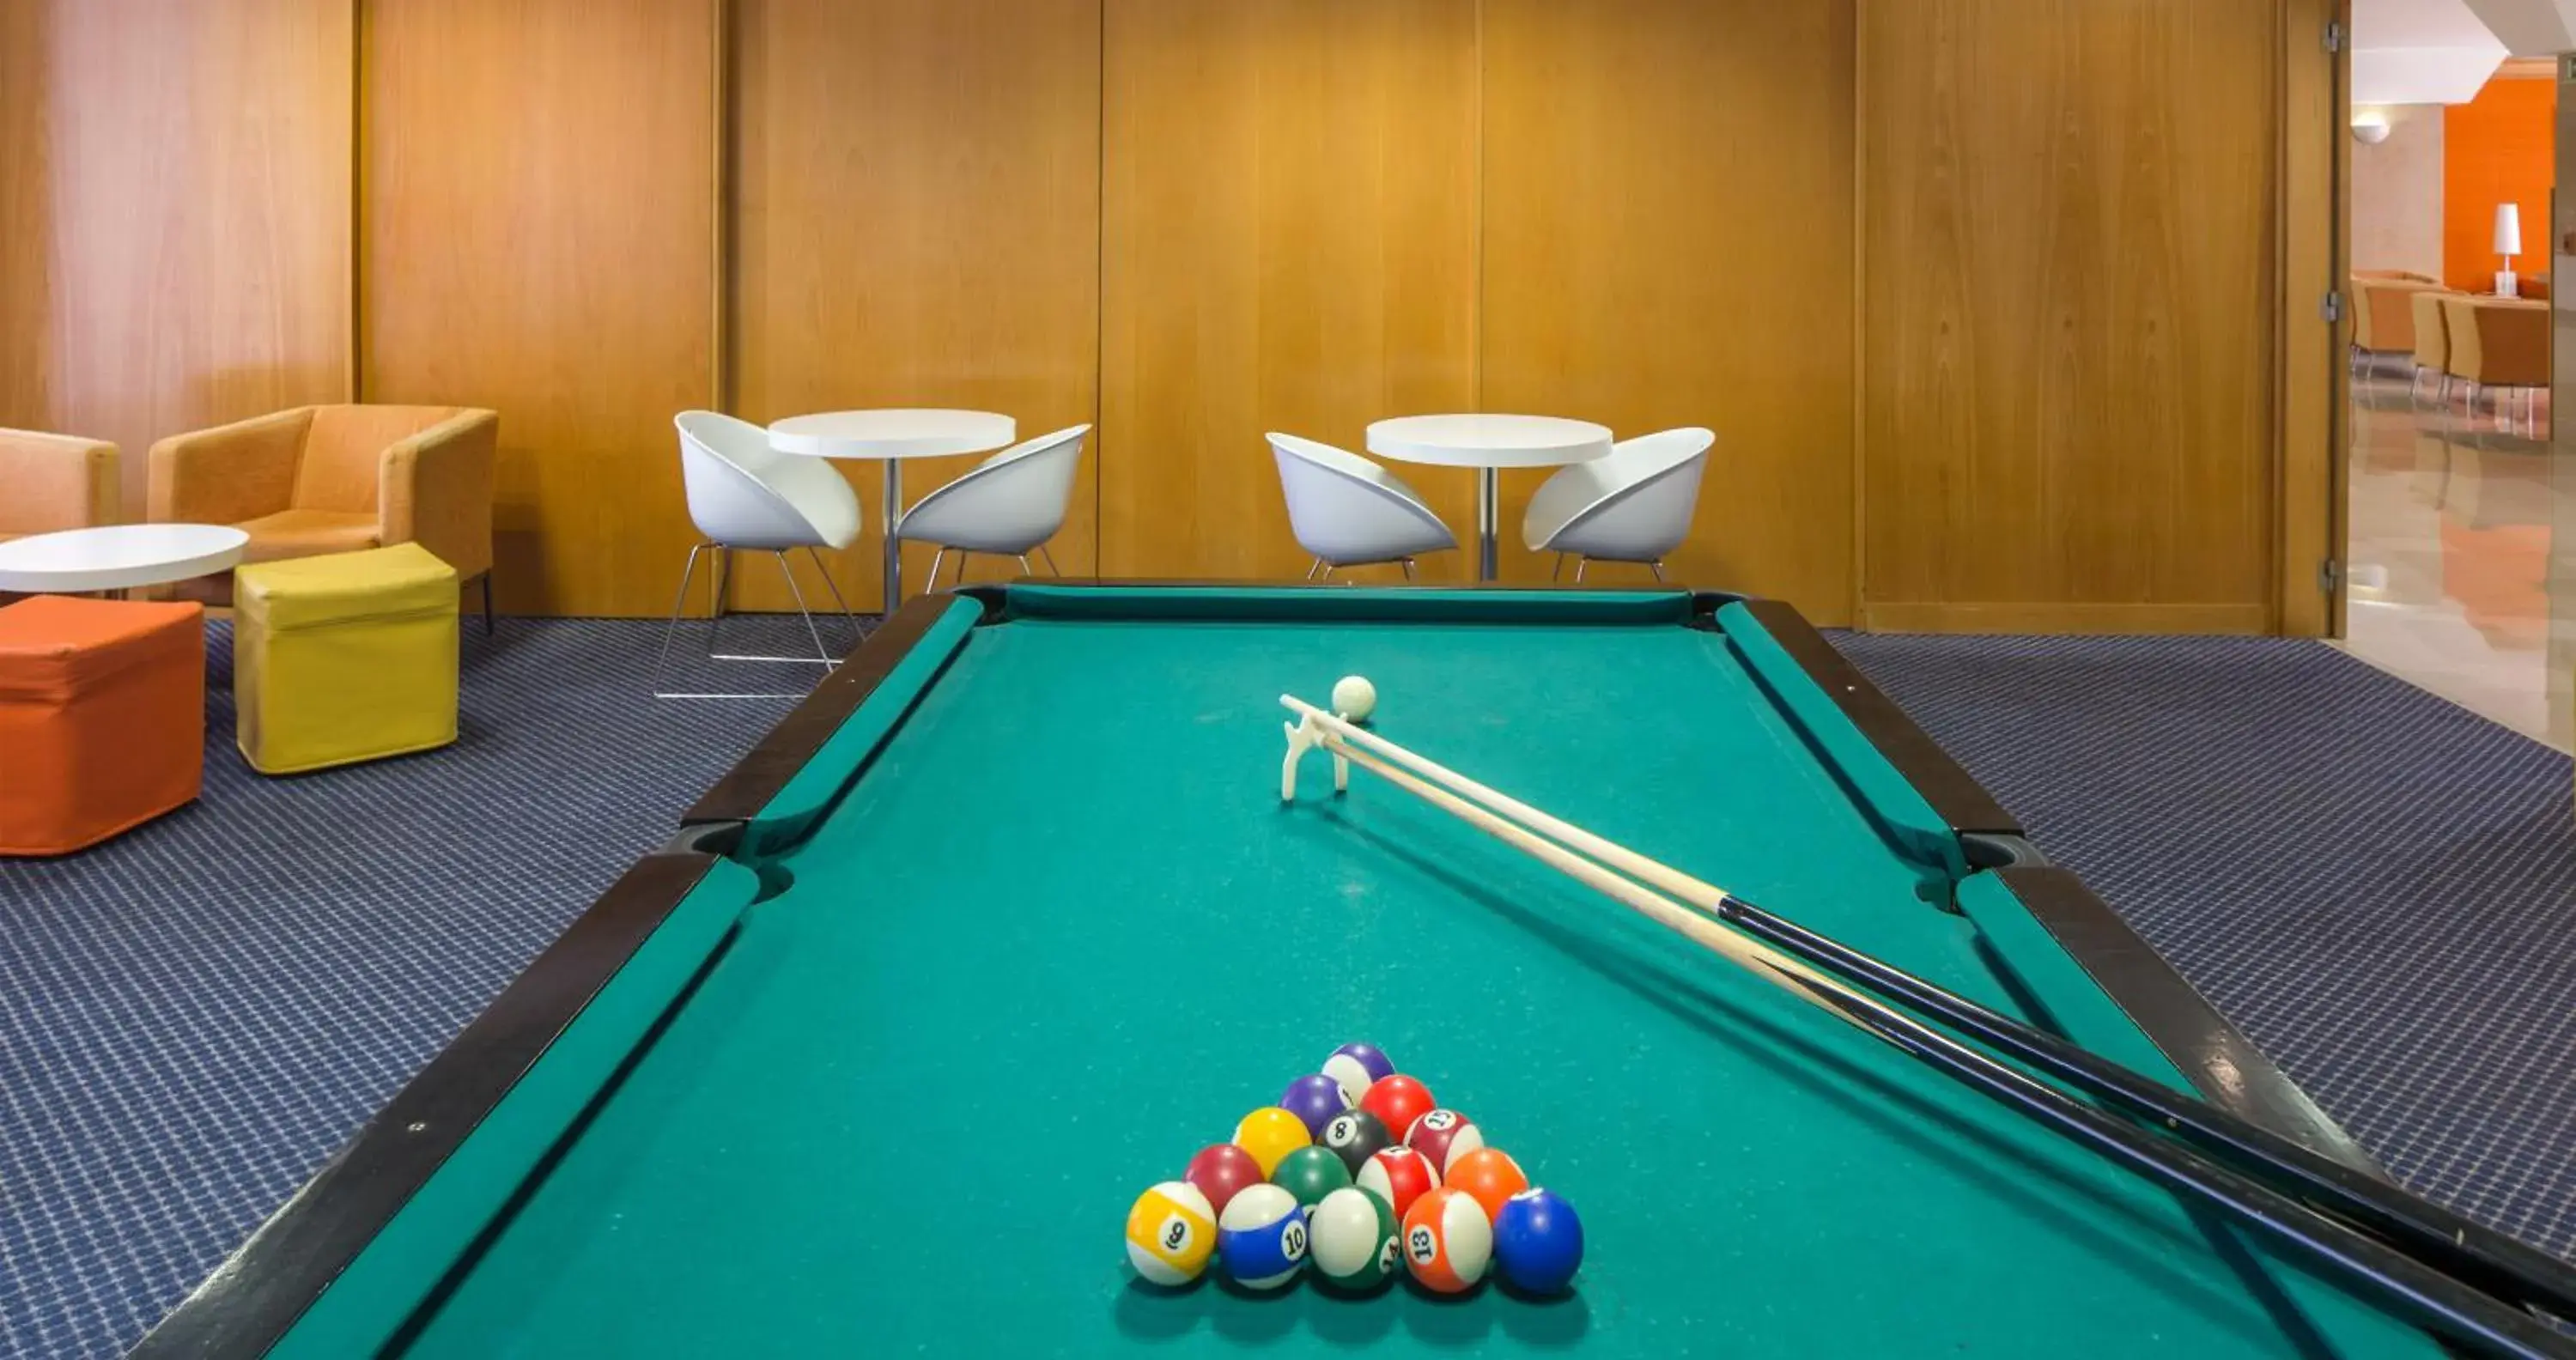 Game Room, Billiards in Hotel Apartamento Sinerama